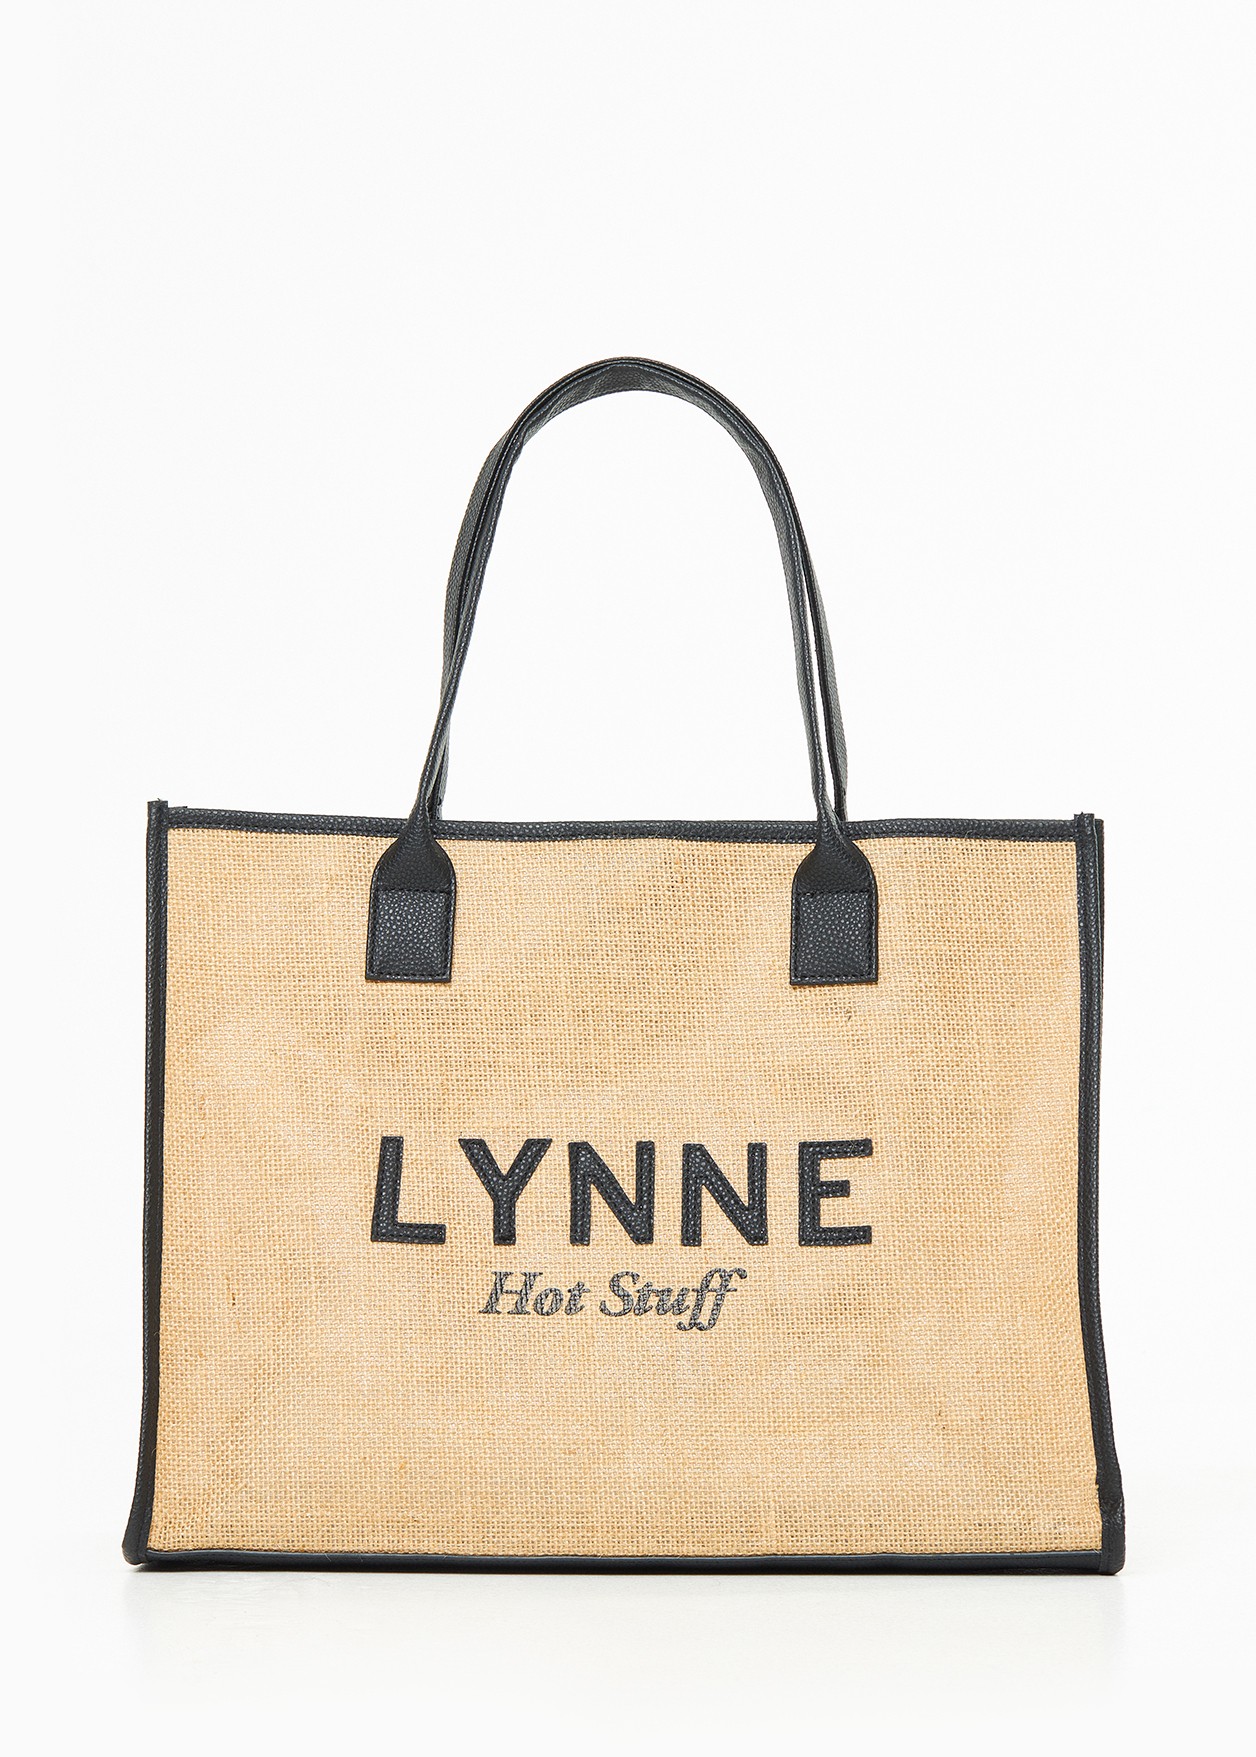 Straw tote bag with LYNNE logo